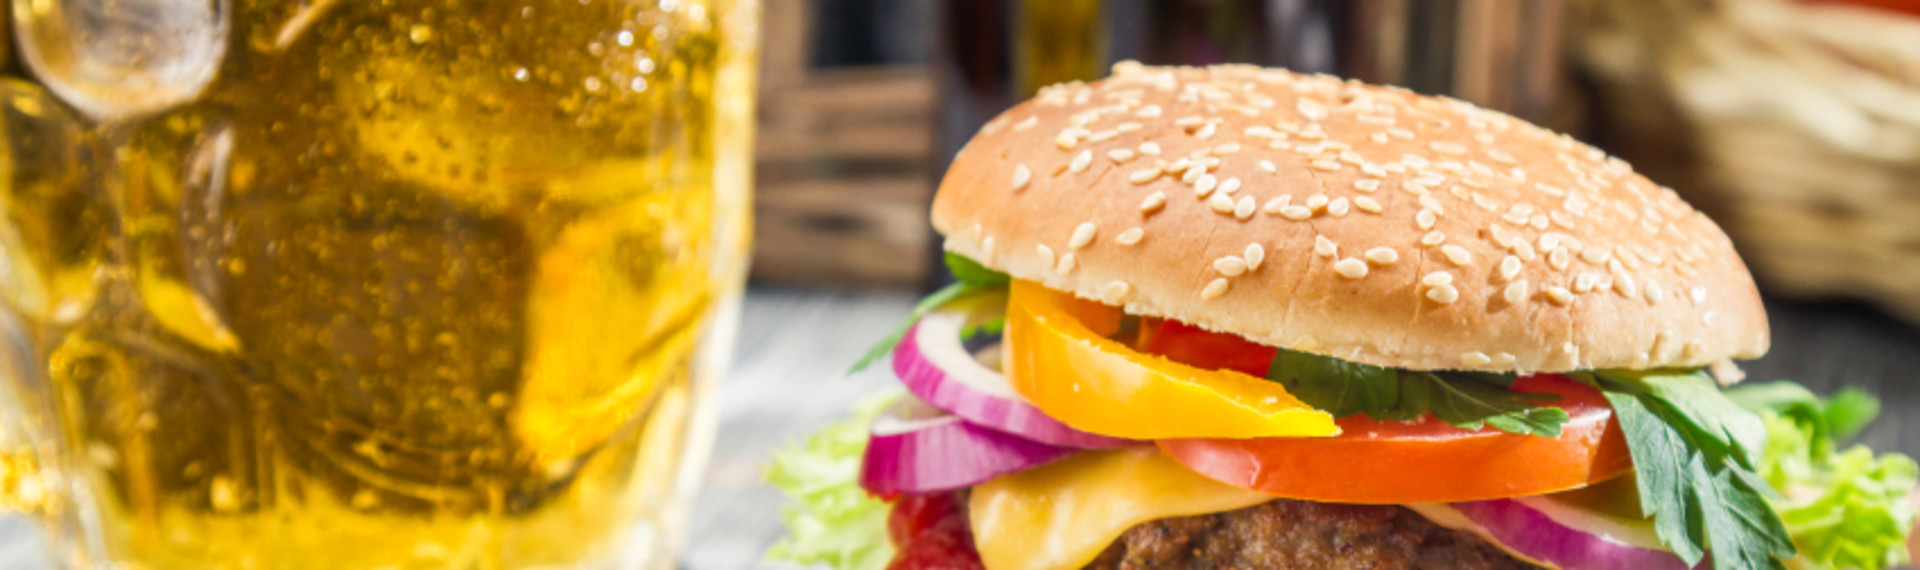 Burger & Bier Berlin | Deftig schlemmen in Berlin | Pissup Reisen